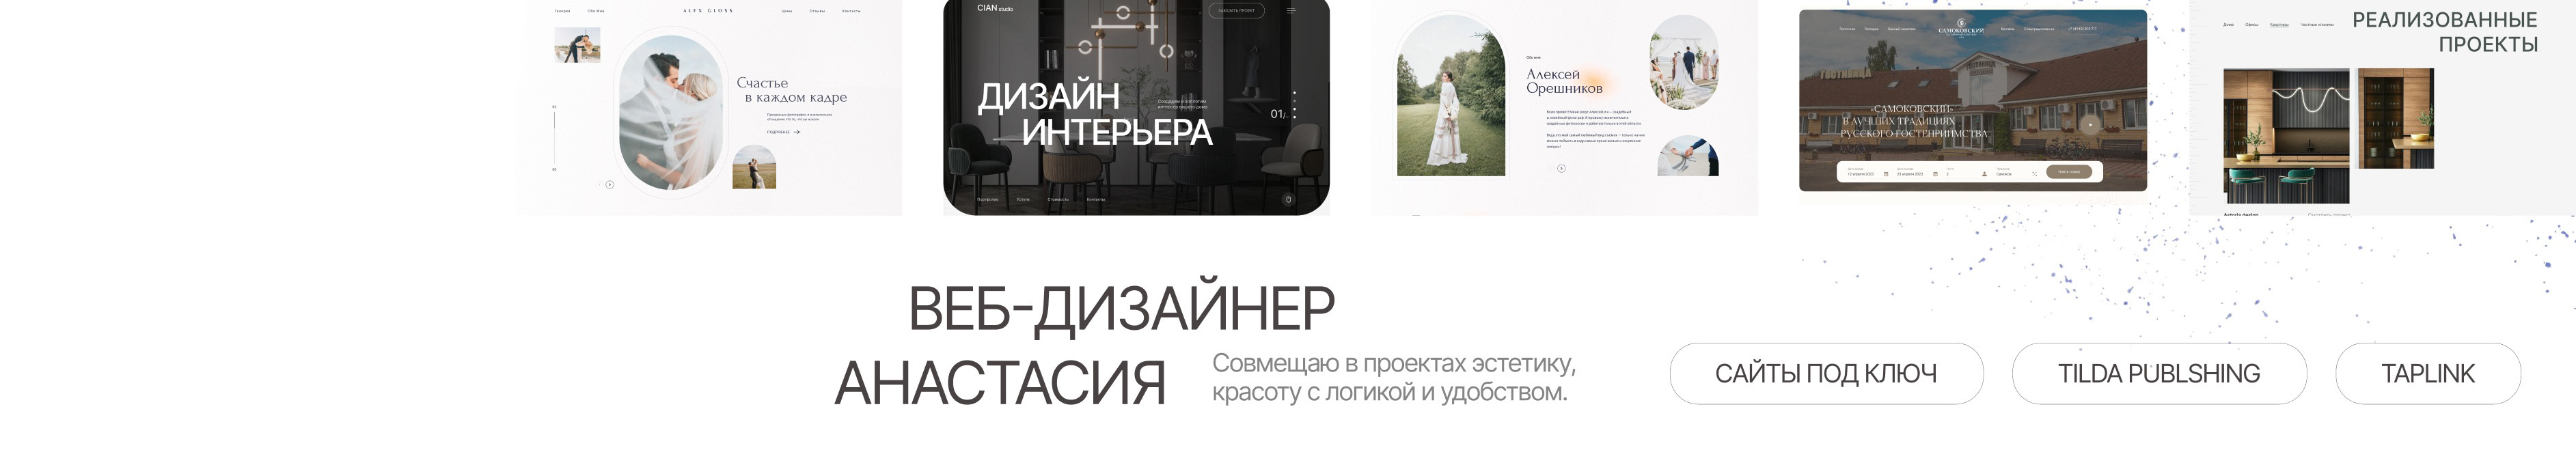 Анастасия Олесюк's profile banner